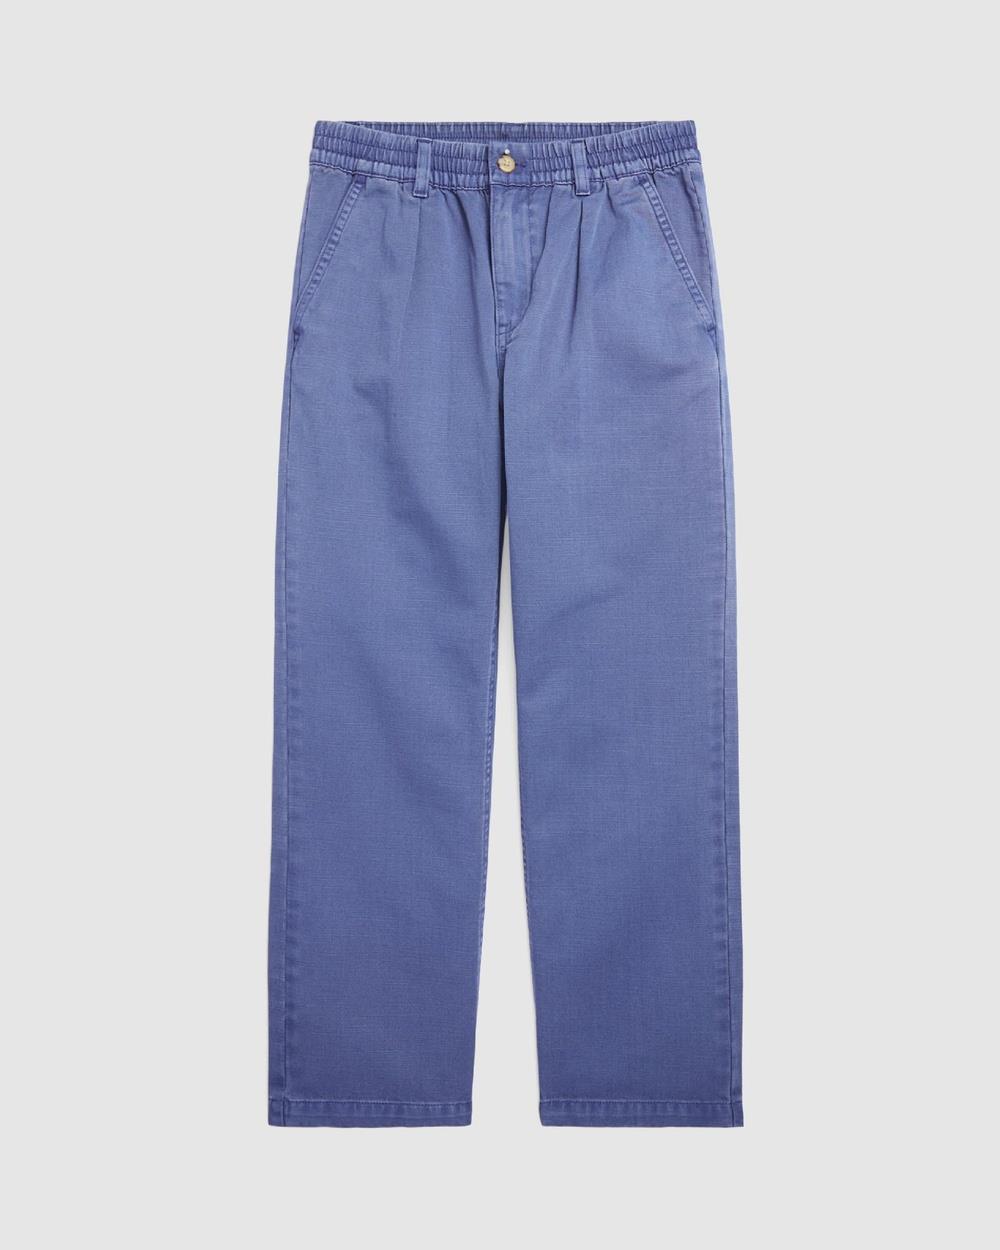 Polo Ralph Lauren - Cotton Chino Drawstring Pants Teens - Pants (Navy) Cotton Chino Drawstring Pants - Teens